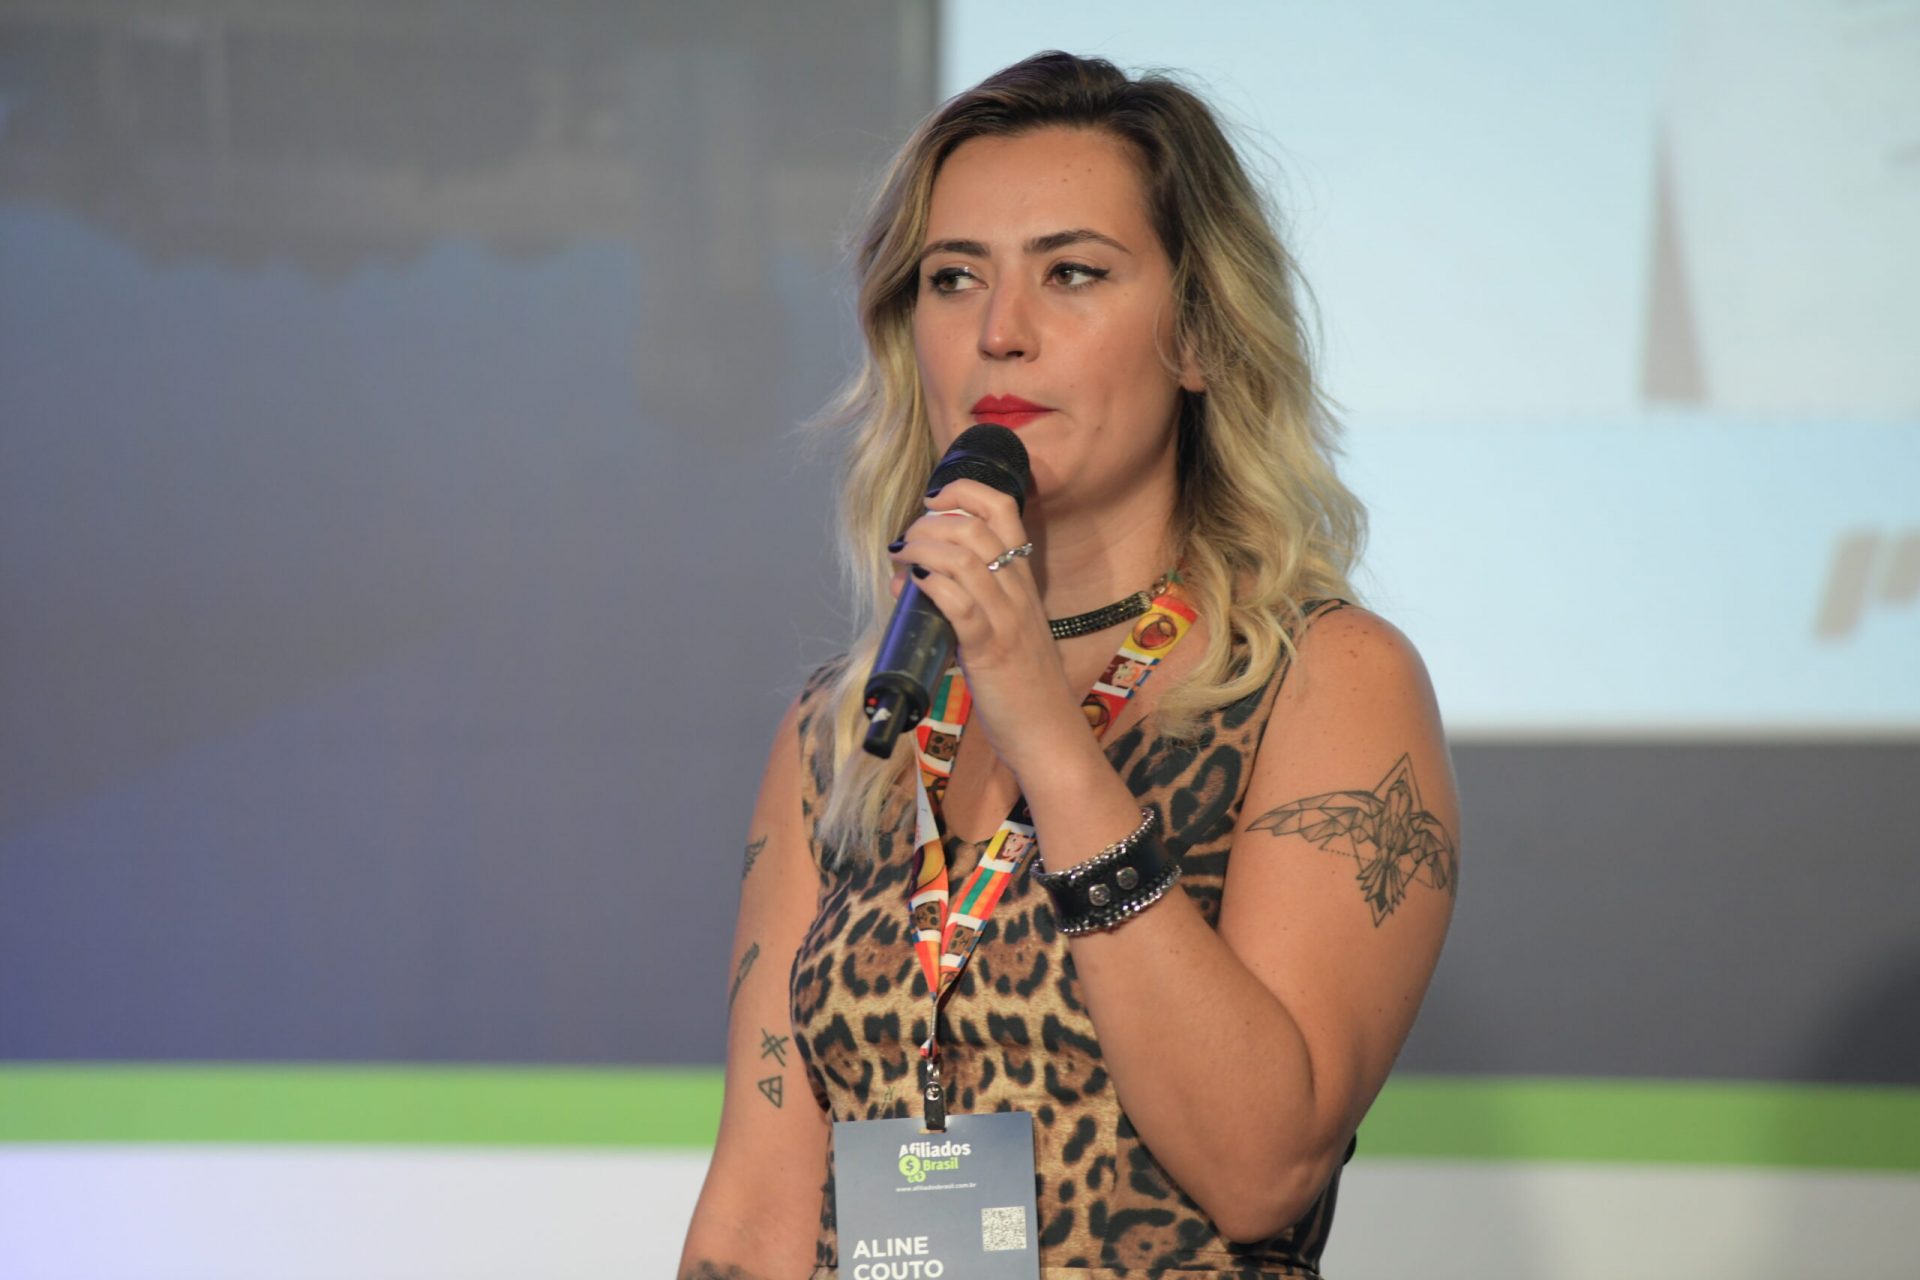 Aline Couto palestrando na Afiliados Brasil 2019